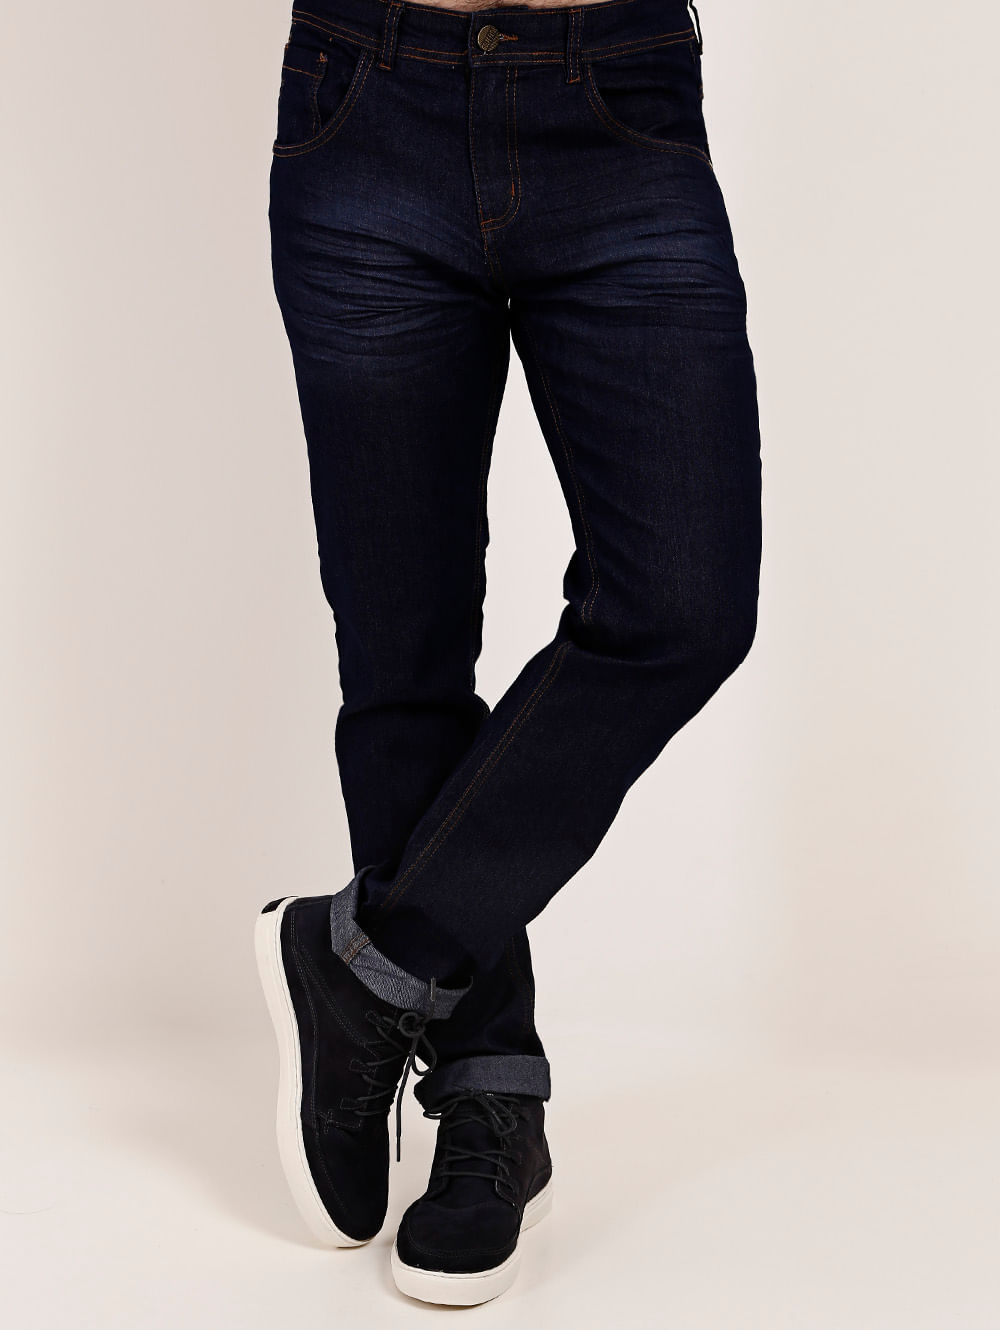 jeans azul marinho